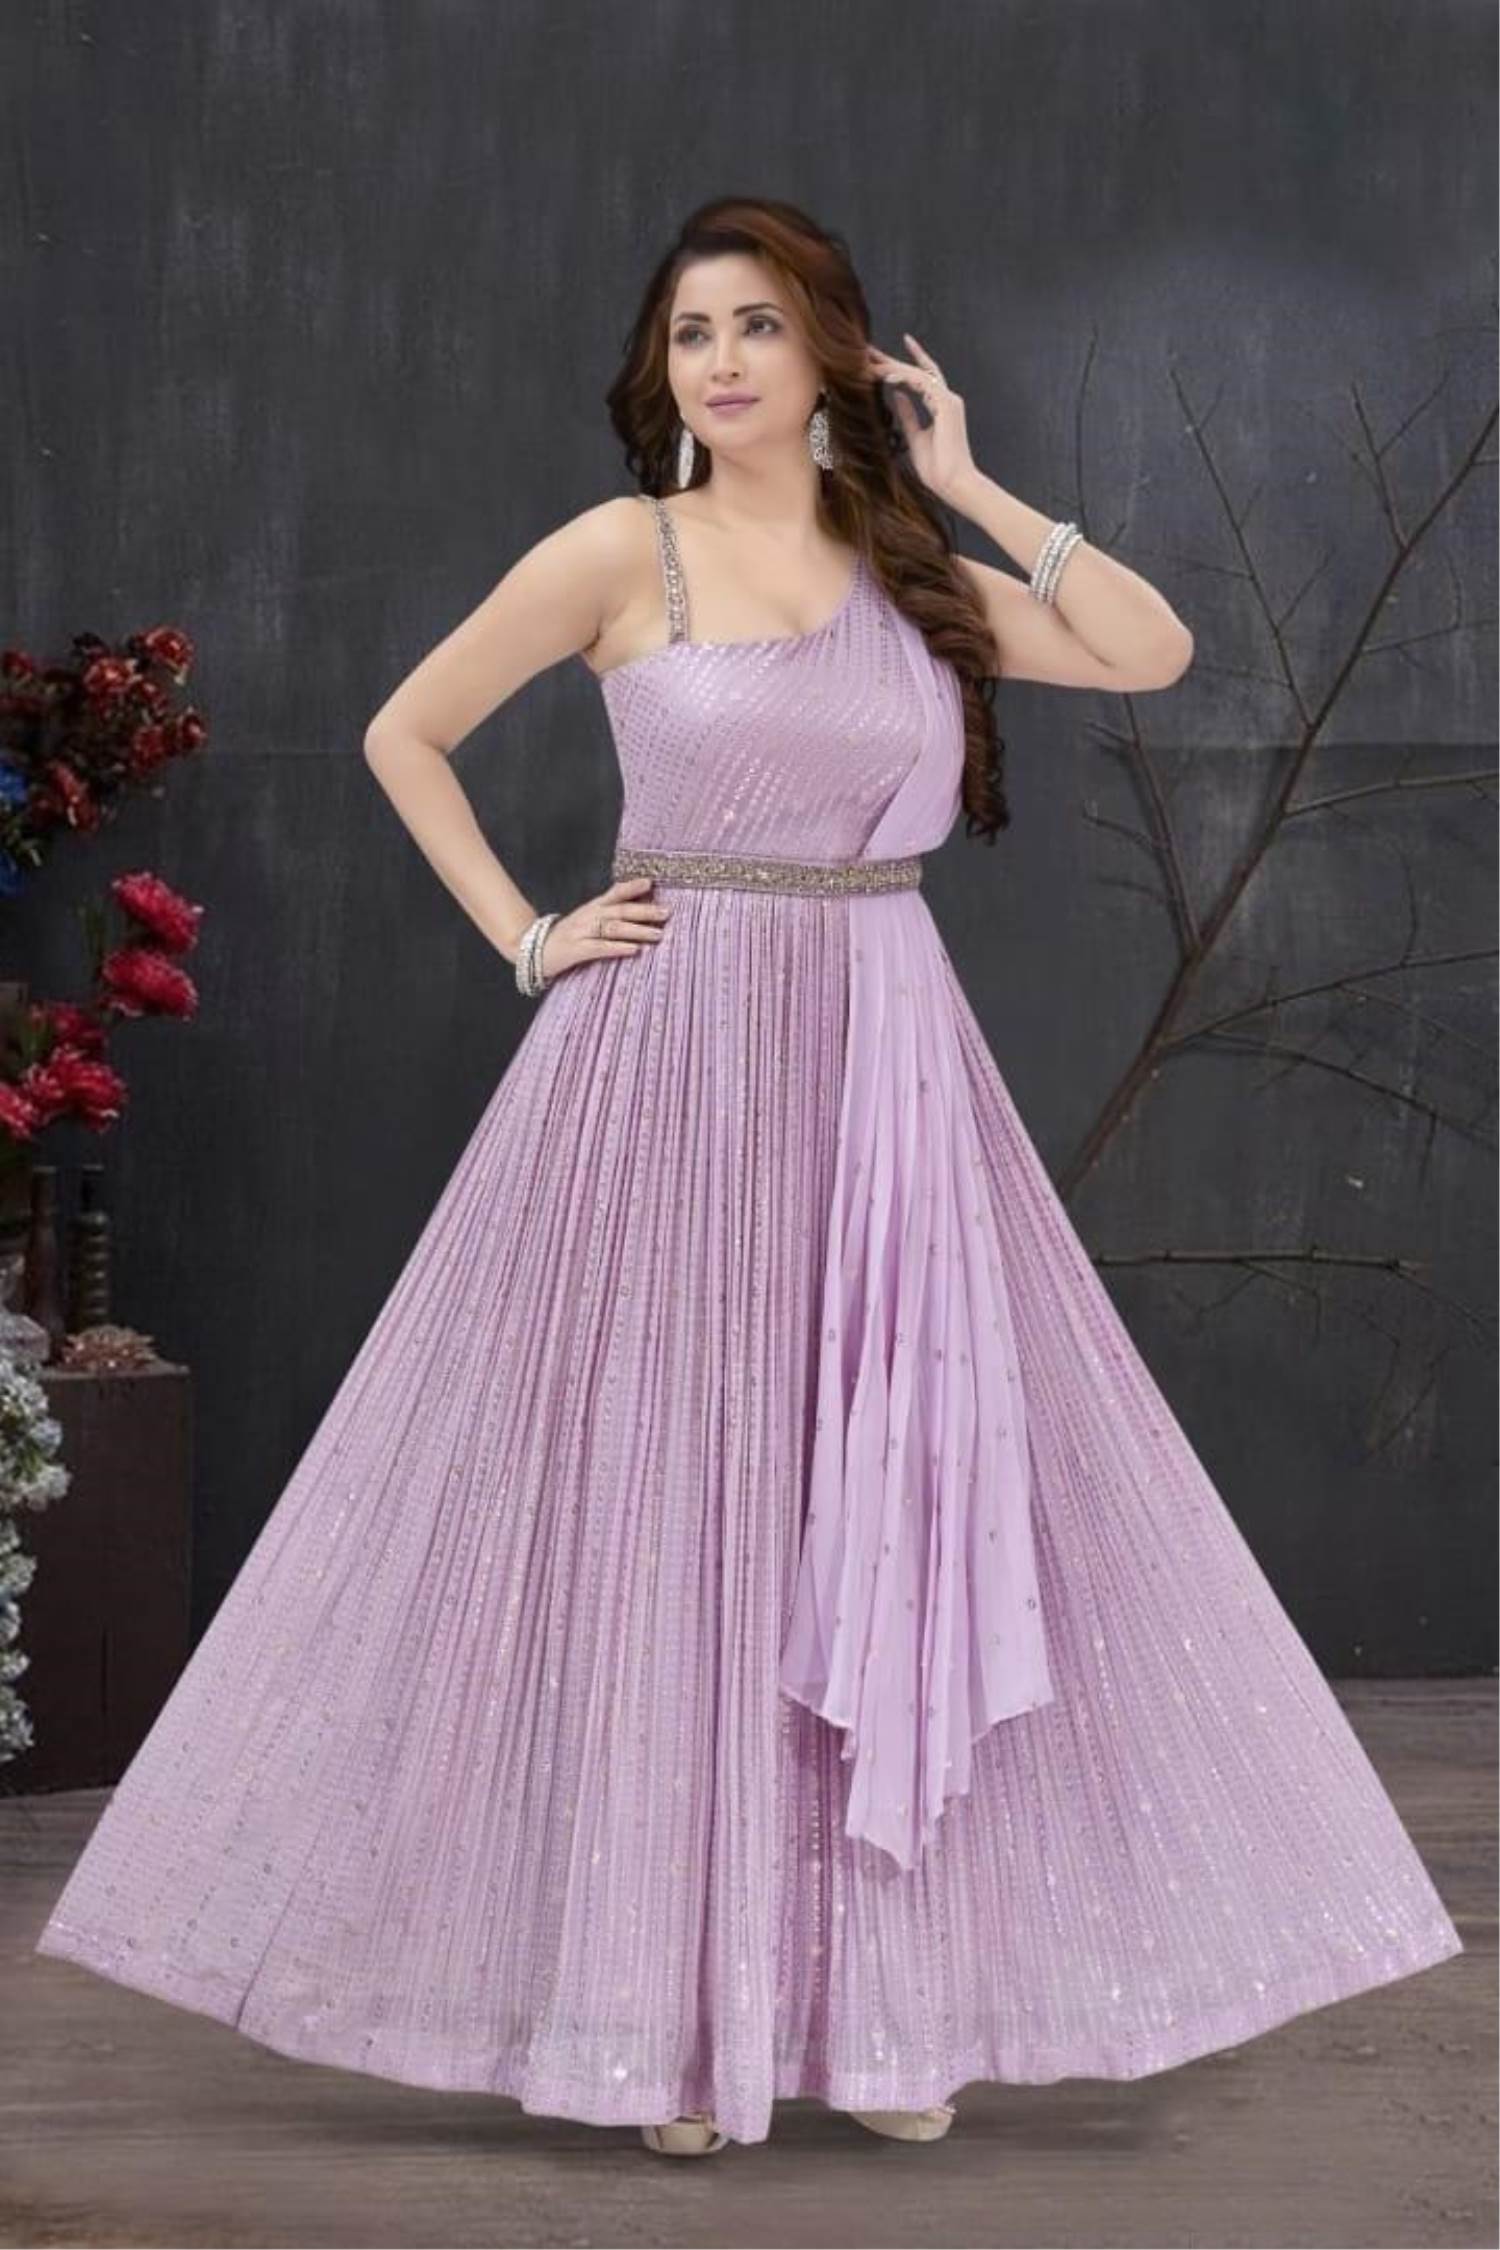 Buy light purple satin spaghetti straps prom dress with beading pockets  online at JJsprom.com